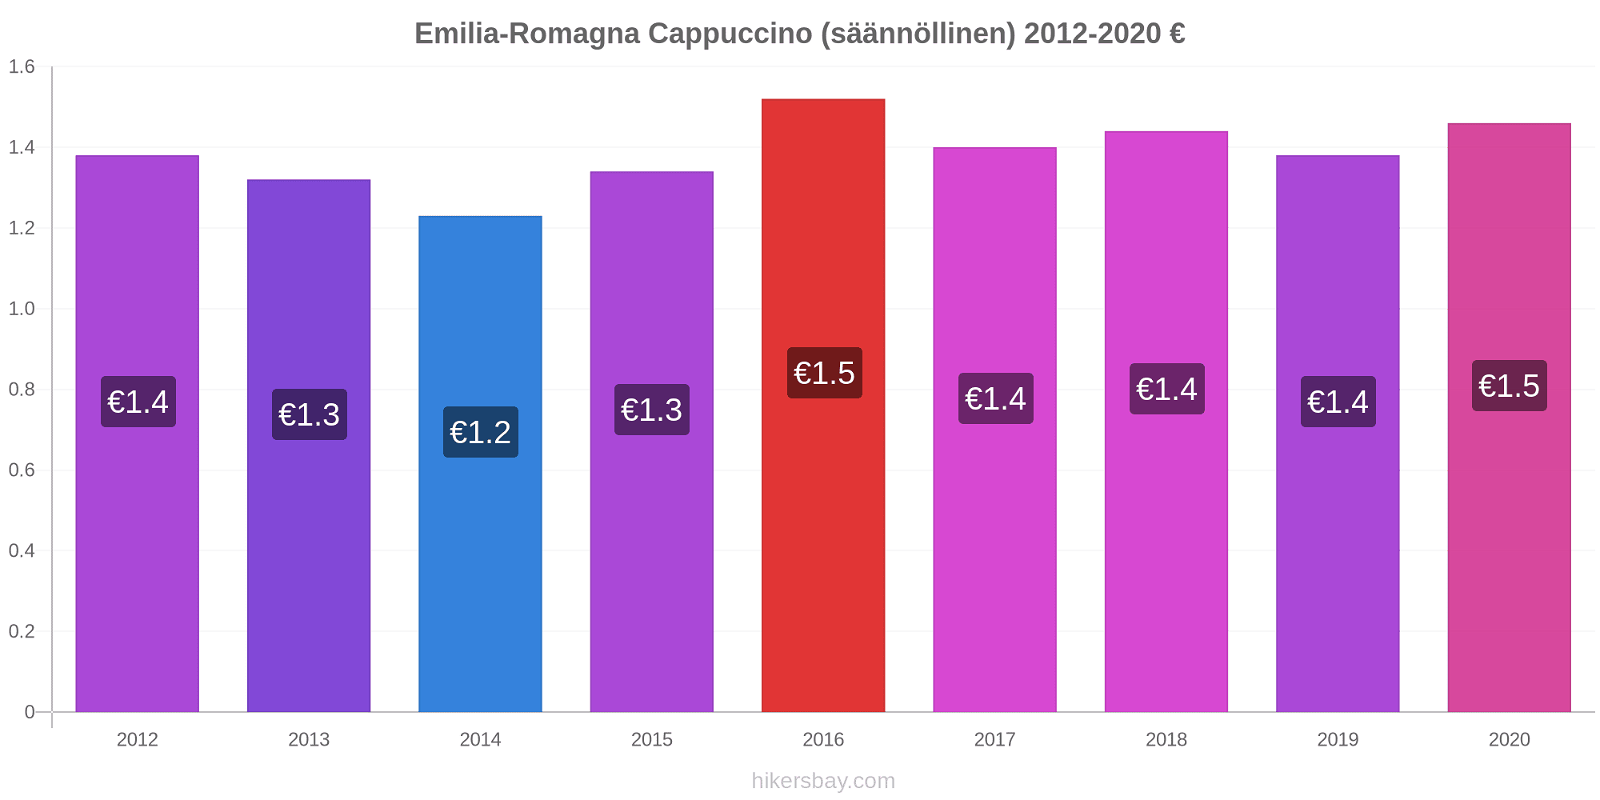 Emilia-Romagna hintojen muutokset Cappuccino (säännöllinen) hikersbay.com